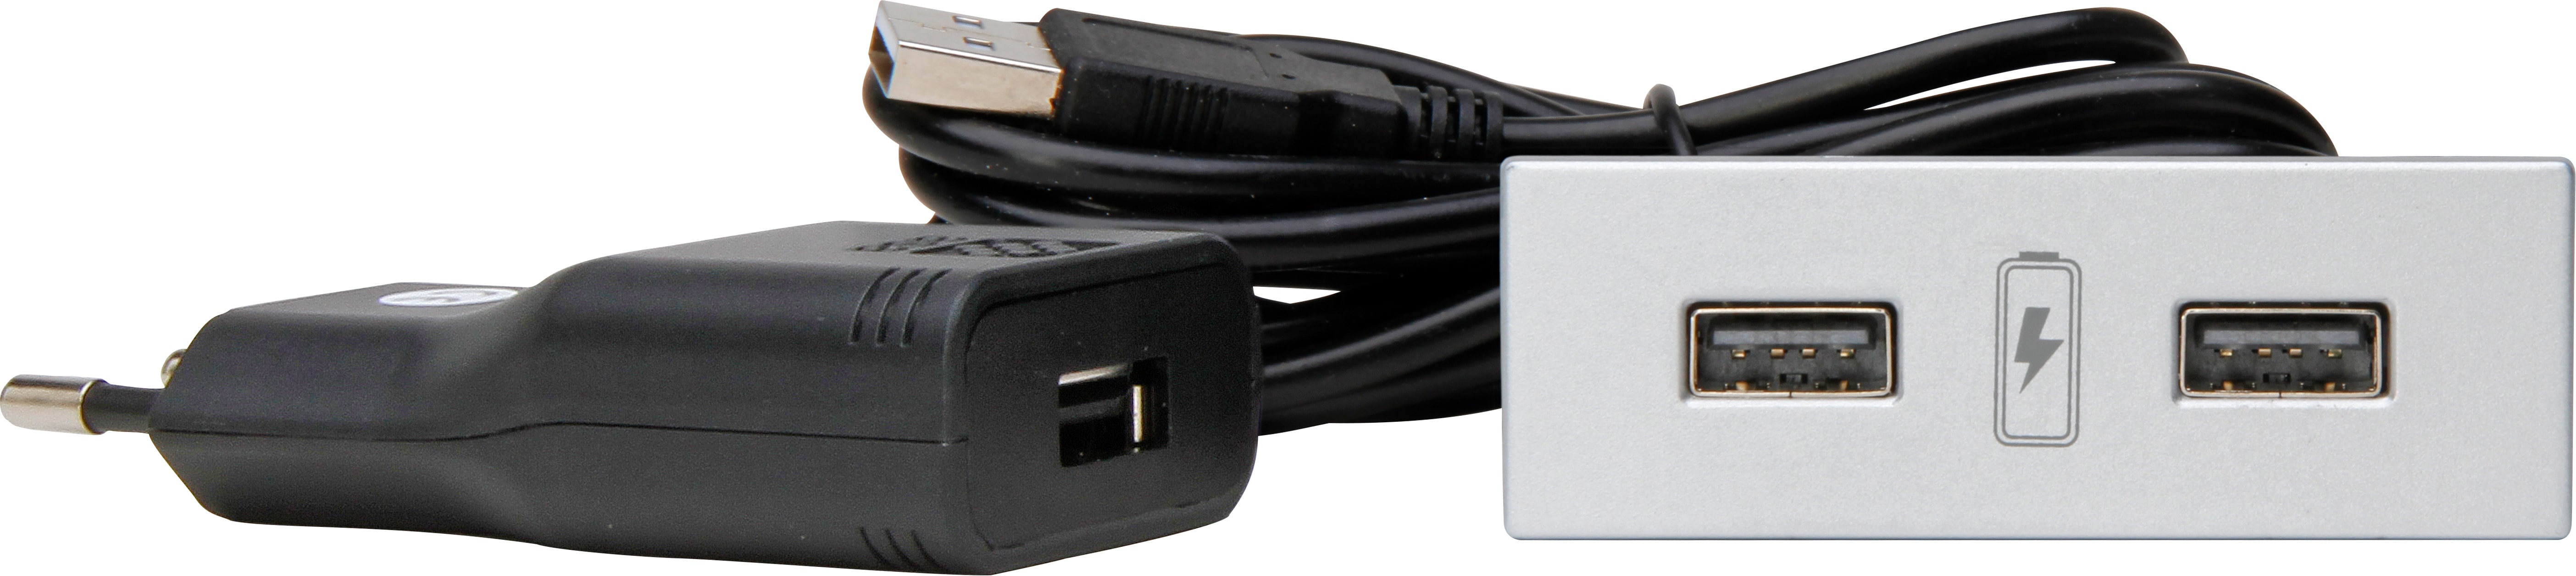 Kopp 939731017 VersaPICK USB Einbauset mit 2x USB, Kunststoff rechteckig alu